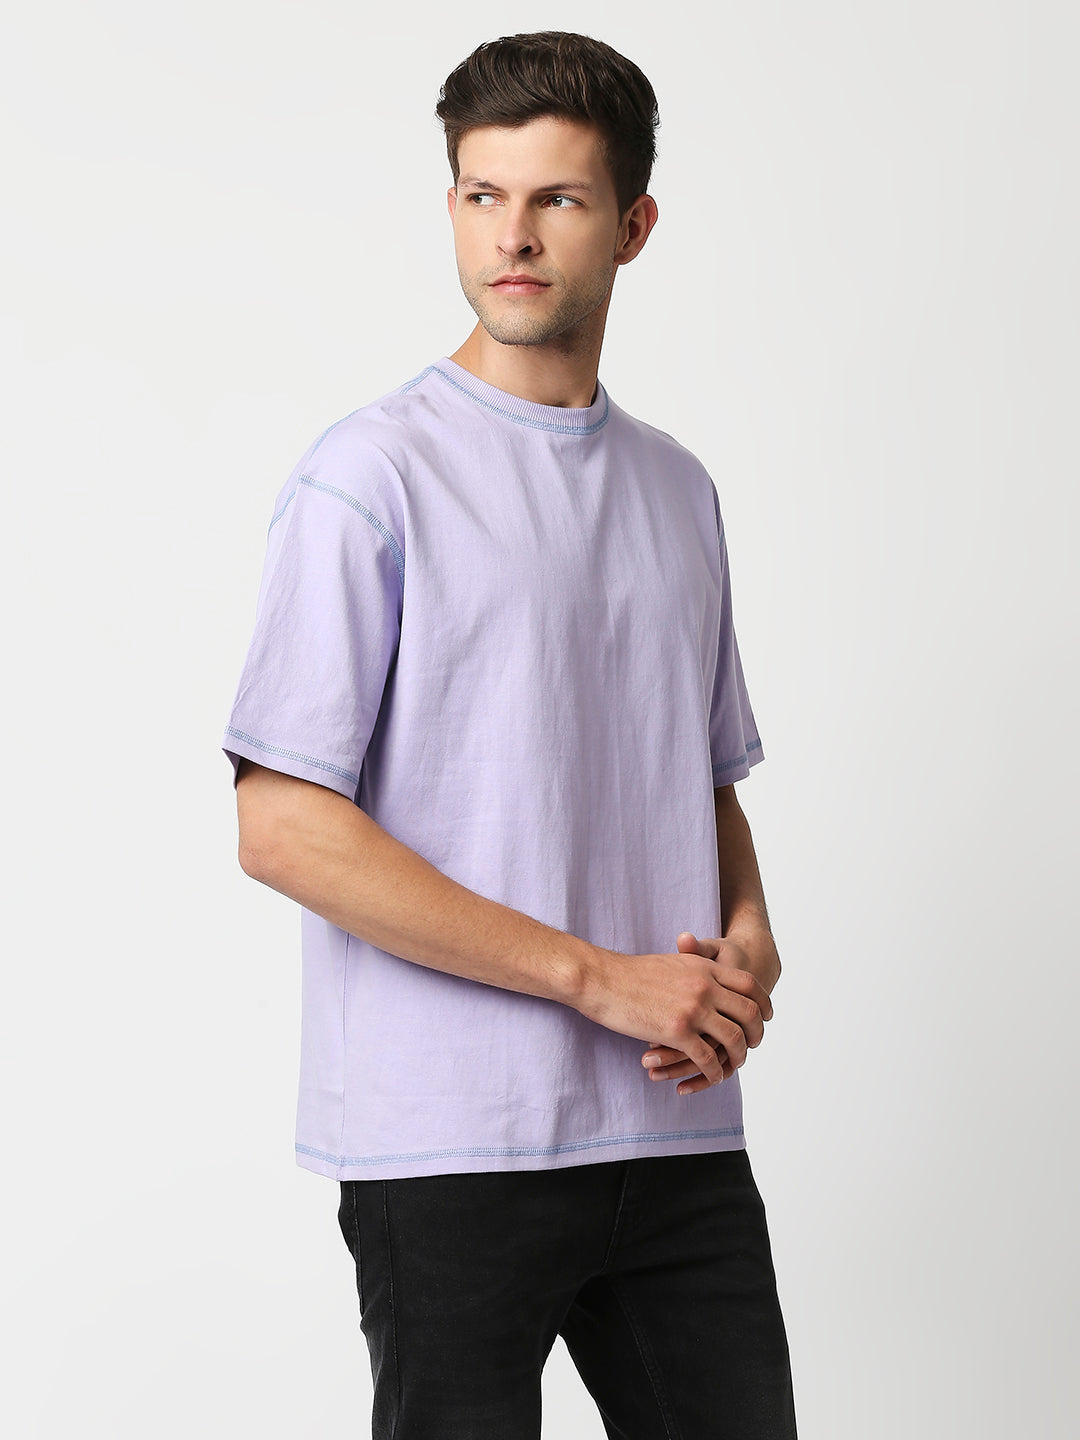 Buy Blamblack Men's Lavender Color Plain Oversized T Shirt